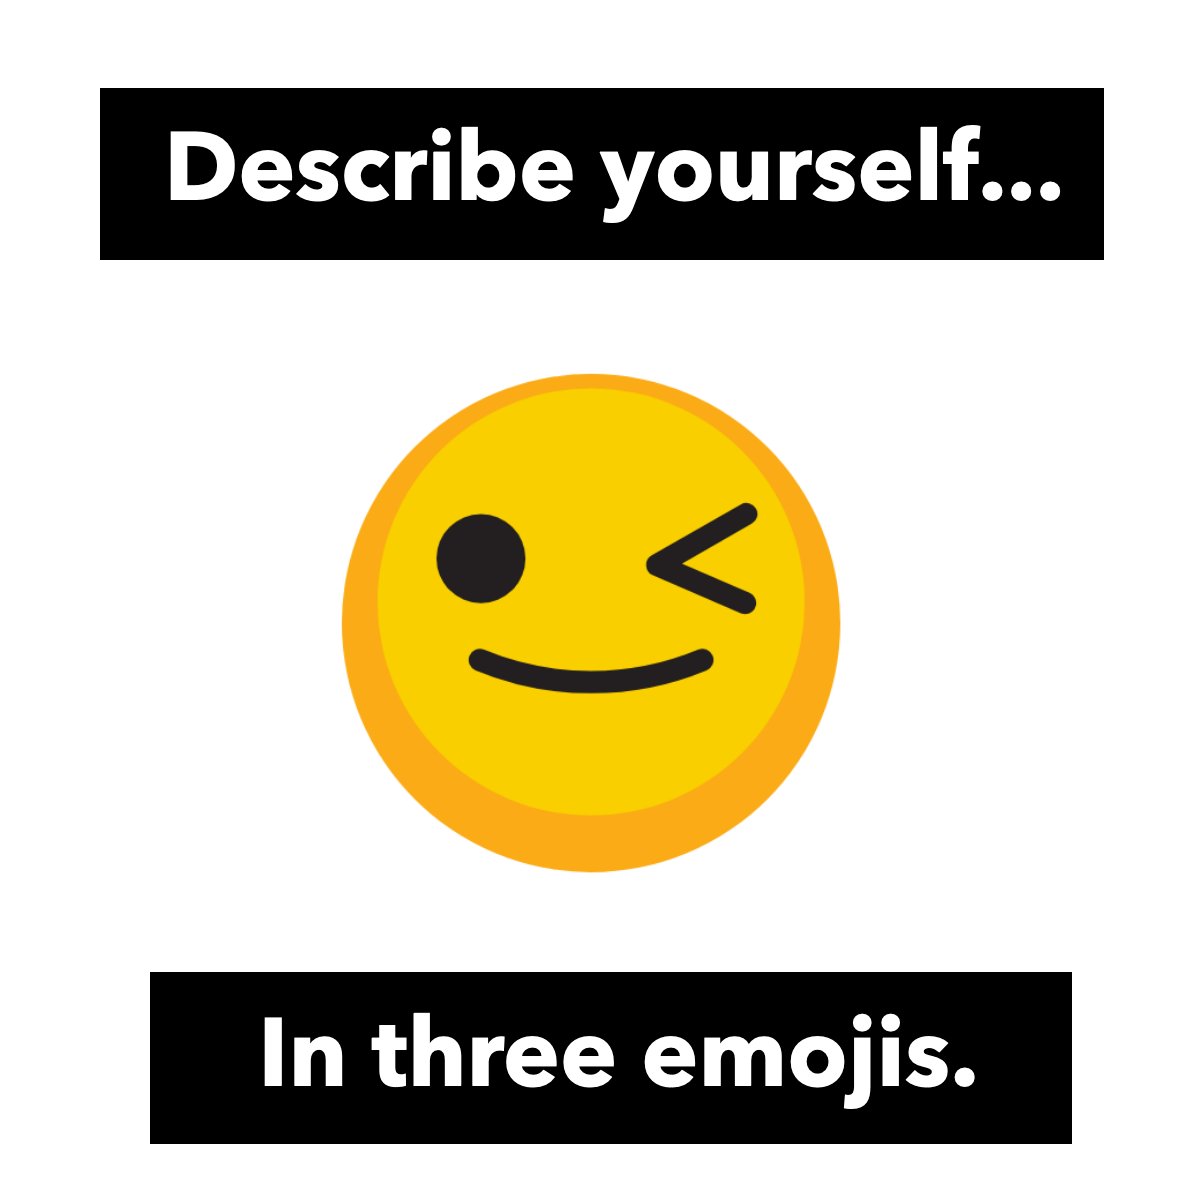 Remember, you can only use three. 🤯

#describeyourself #emojis #tellmeaboutyou #emojibattle 
 #mainerealestate #homesforsale #floridarealestate #selleragent #buyeragent #listingagent #homeimprovements #mainerealestatecompany #mainerealtor #dejalett #tophomesgroup